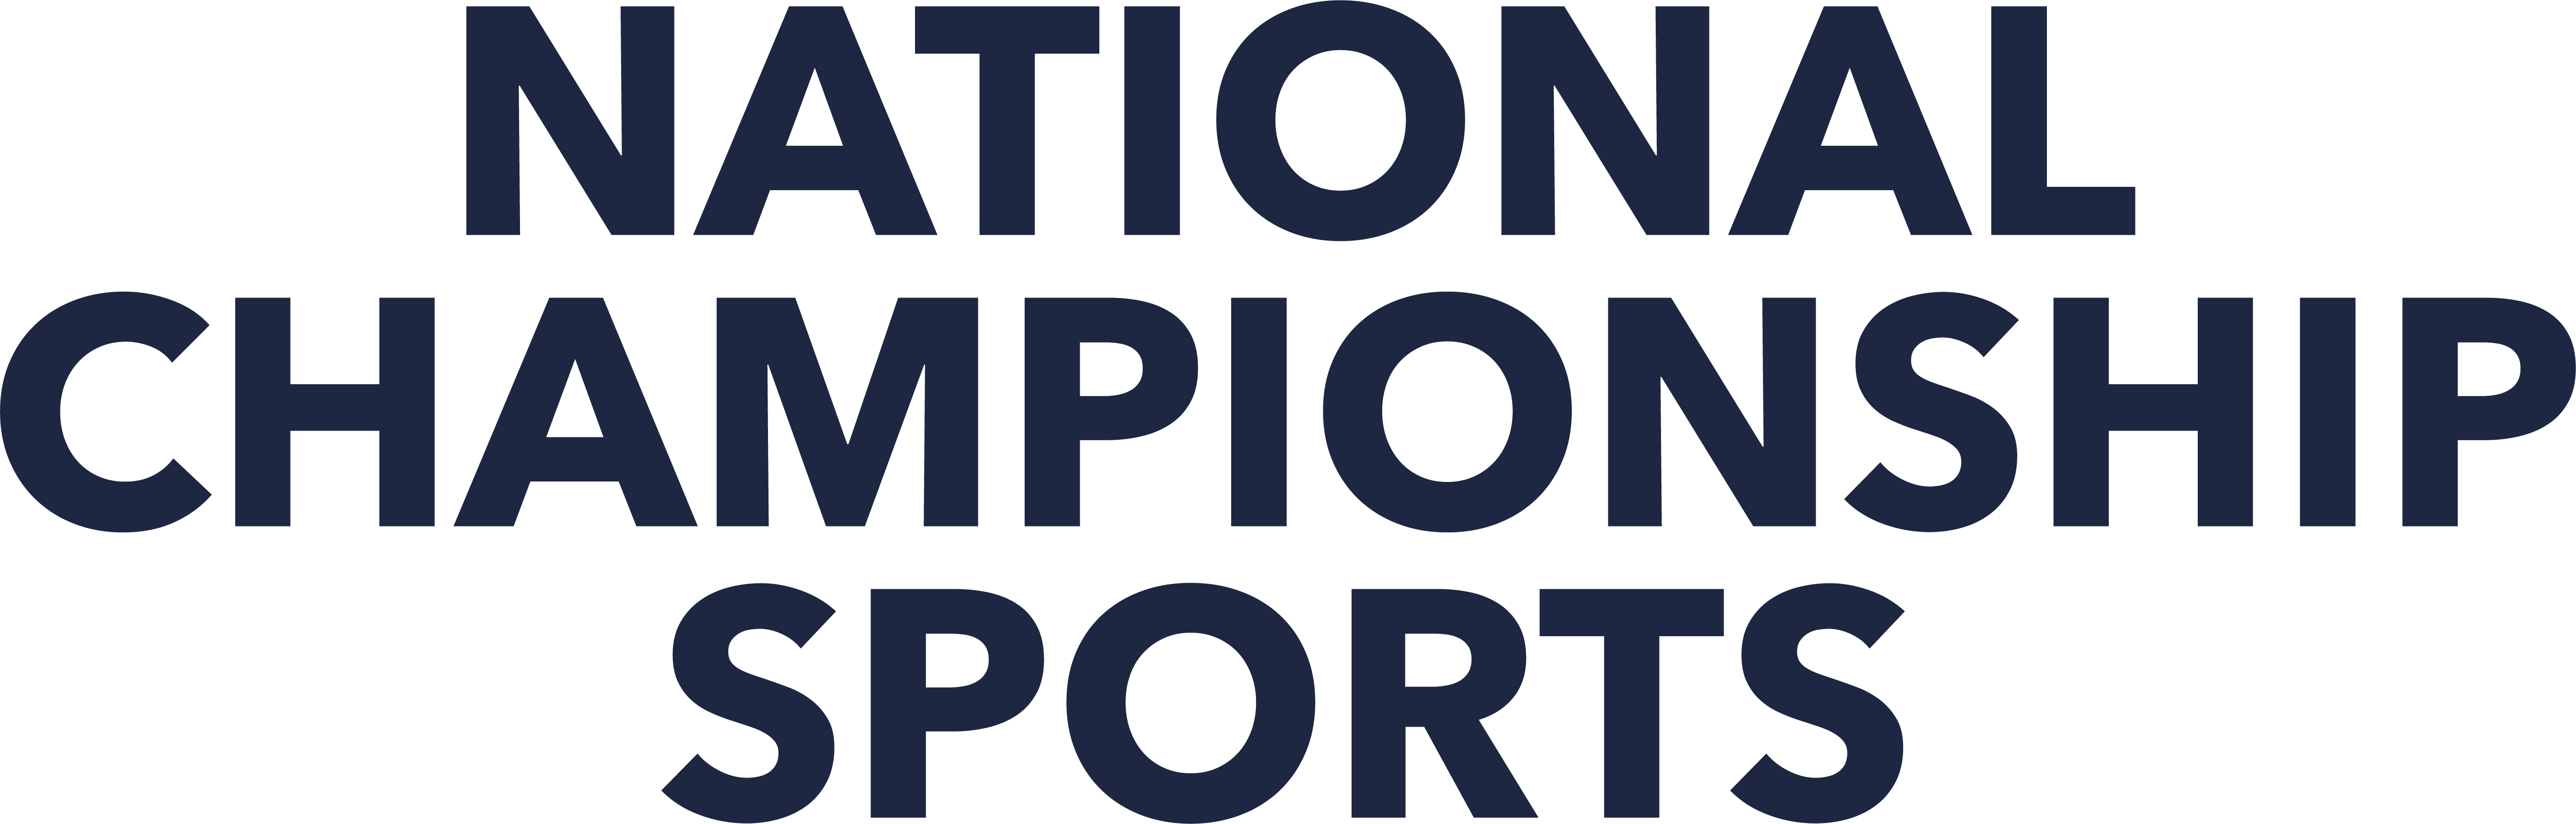 National Championship Sports